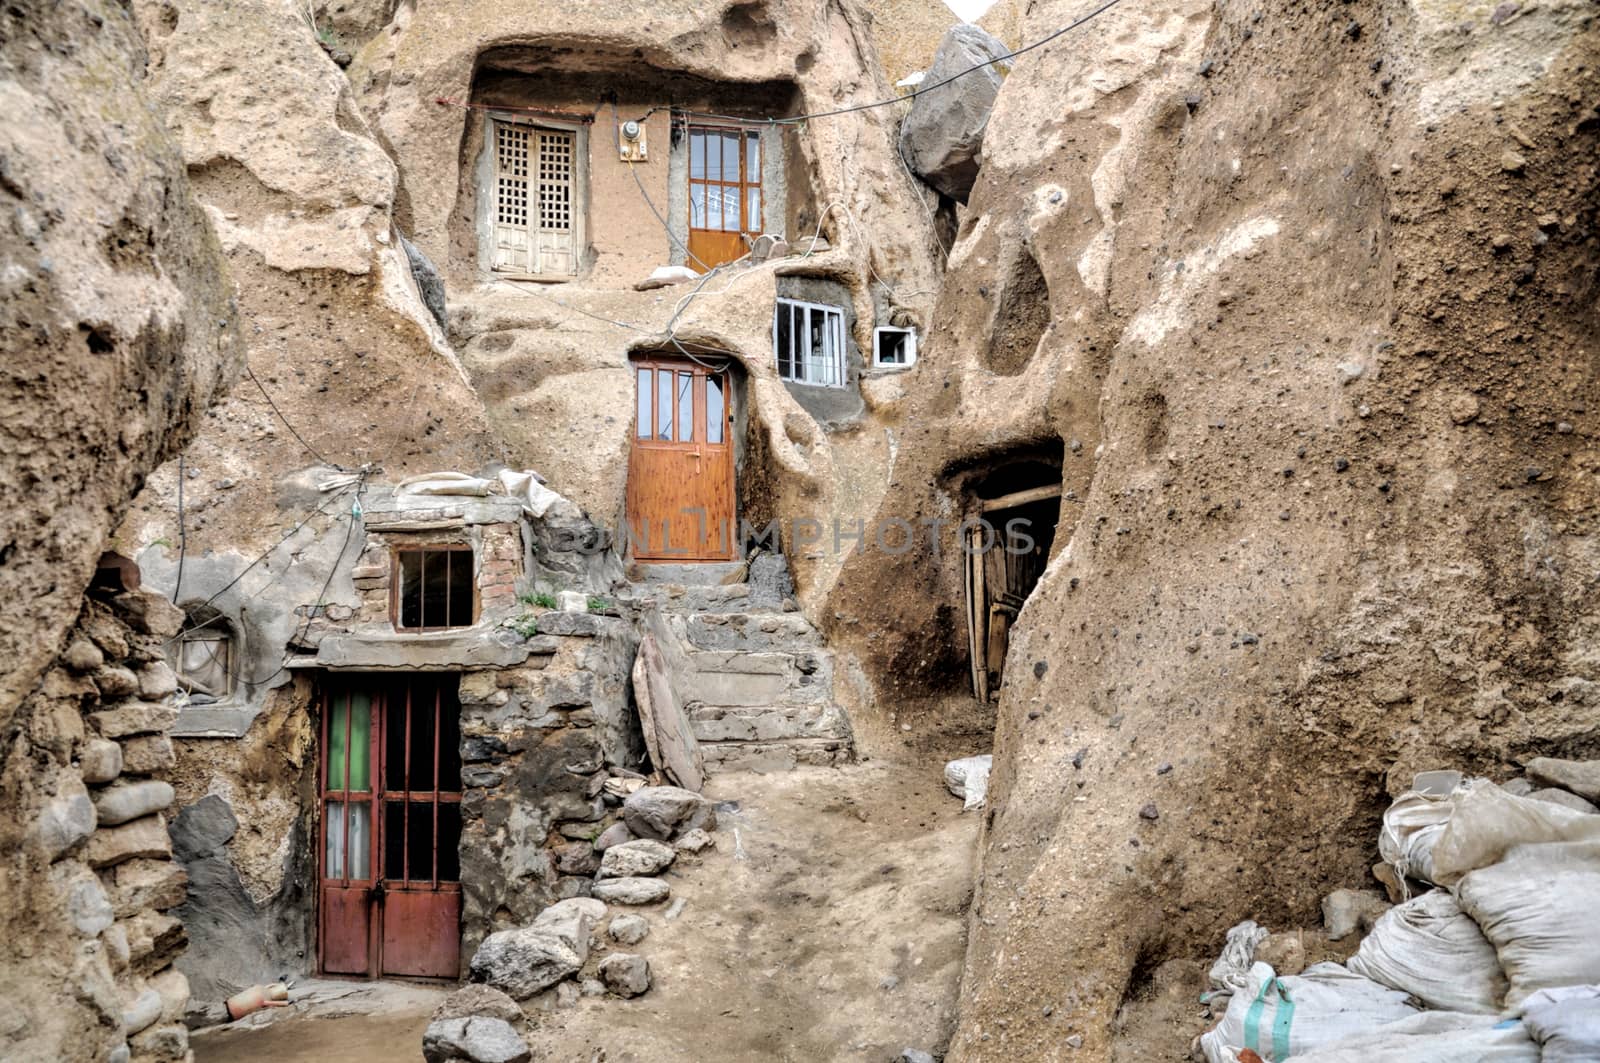 Facade of houses excavated in rock cones in Kandovan village in Iran